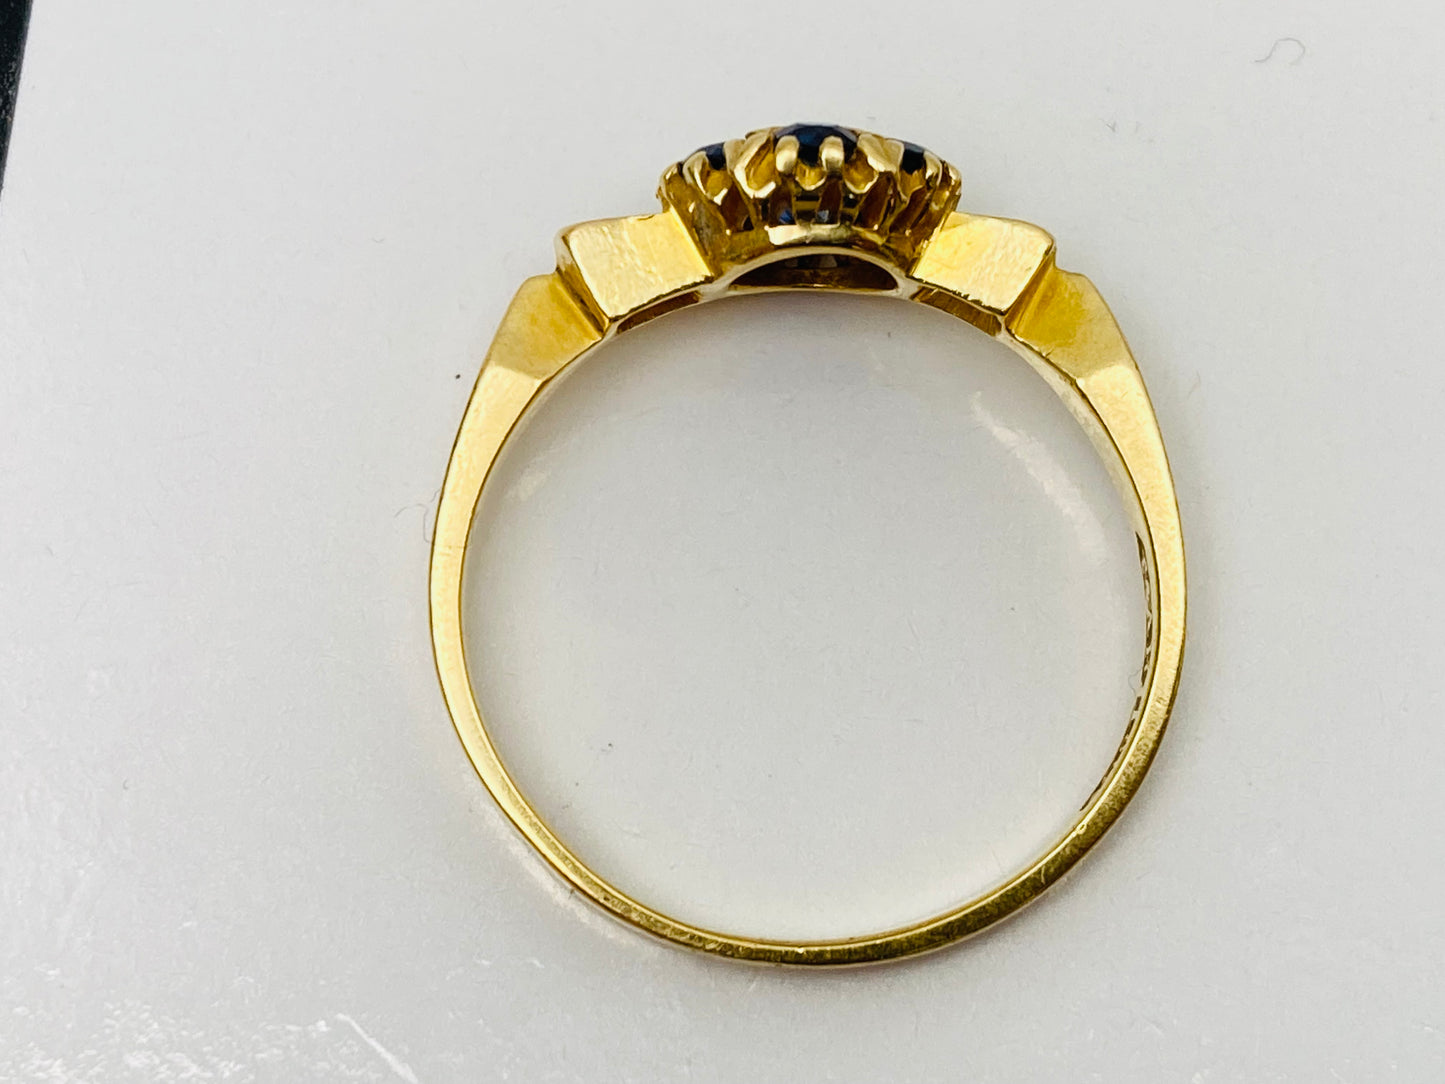 Antique 18ct Gold Sapphire & Diamond Ring